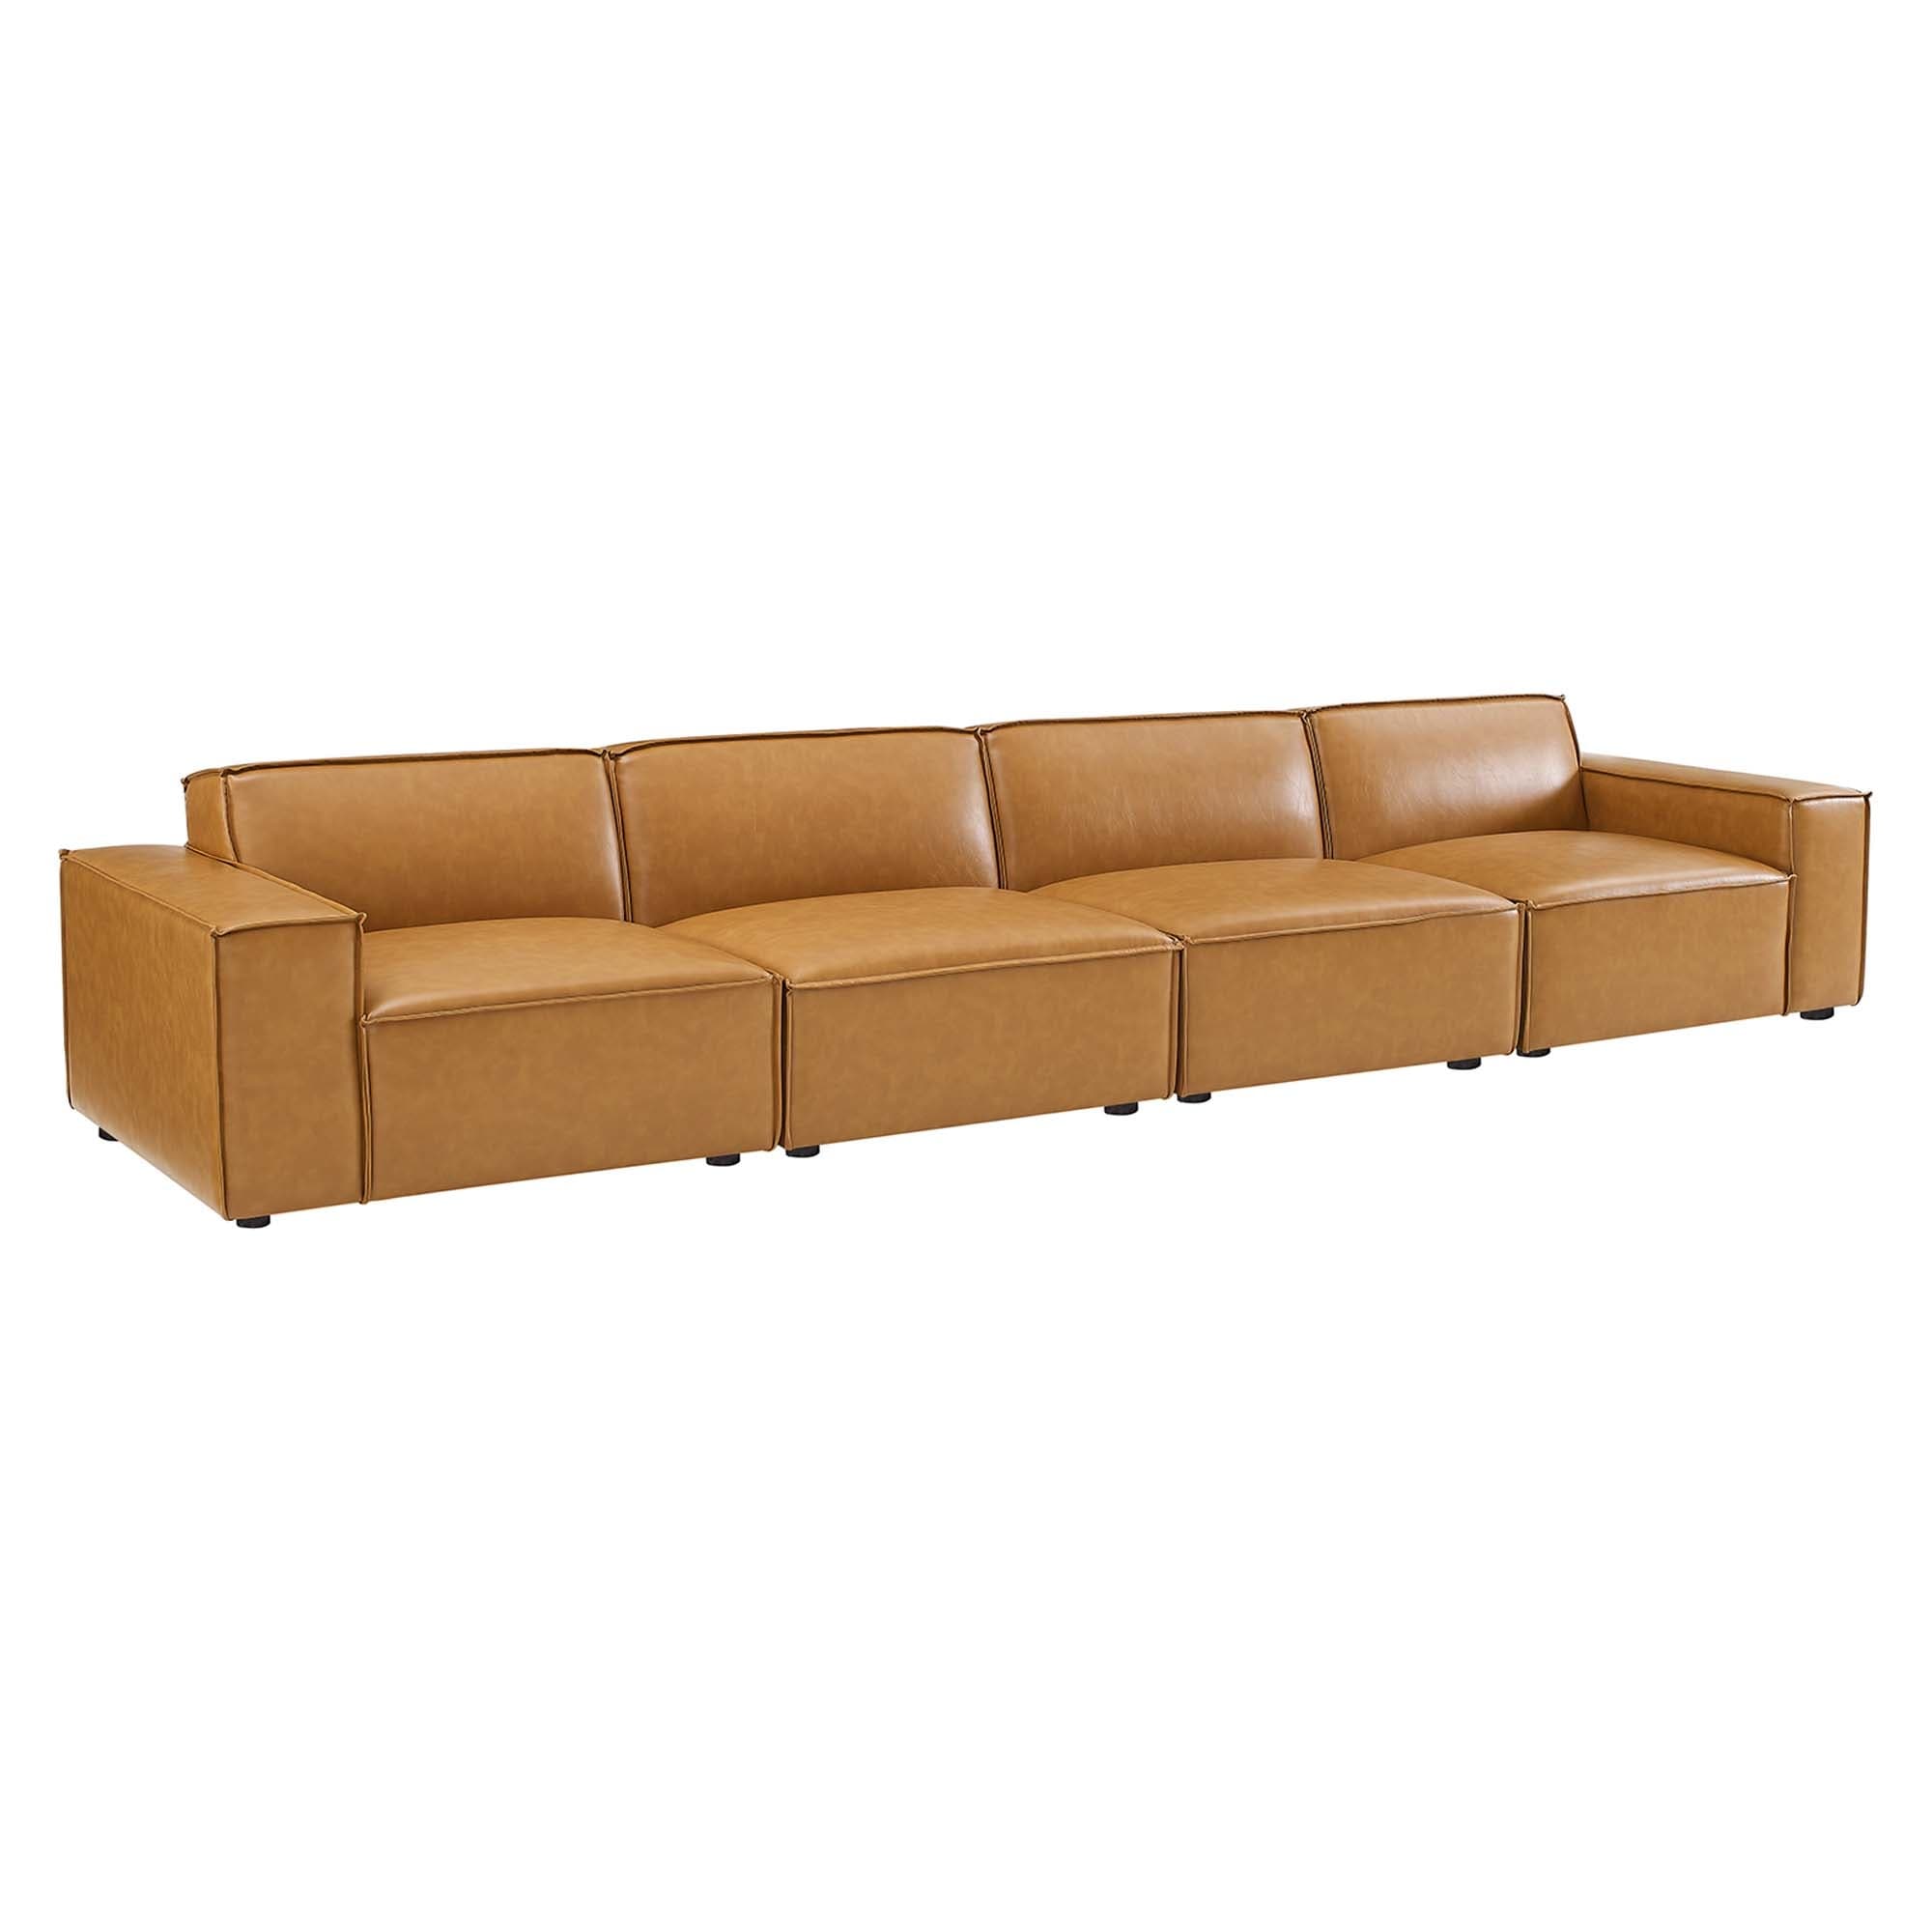 Restore Vegan Leather 4-Piece Sofa - On Sale - Bed Bath & Beyond - 32403104